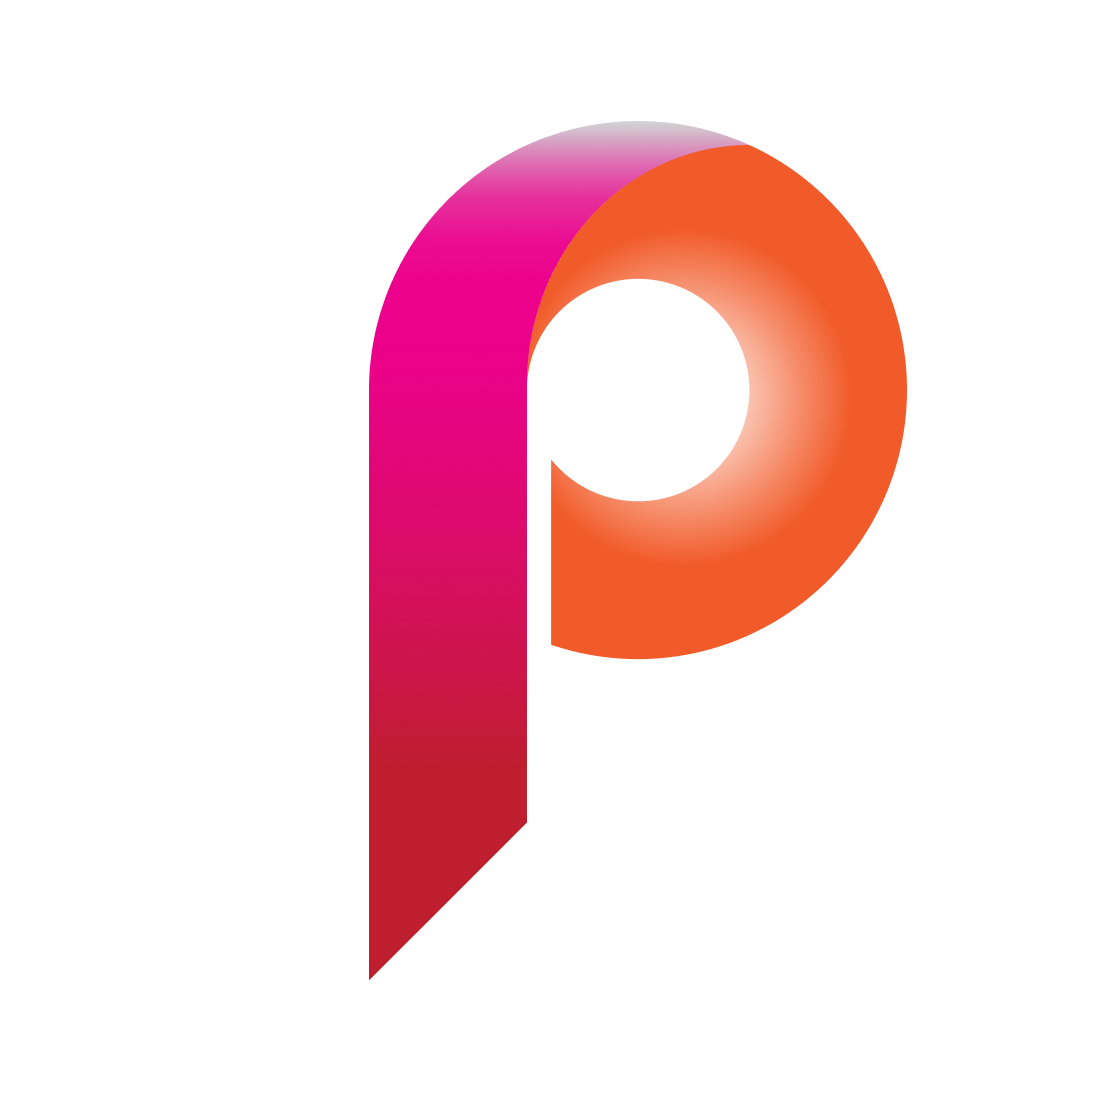 P Letter logo cover image.